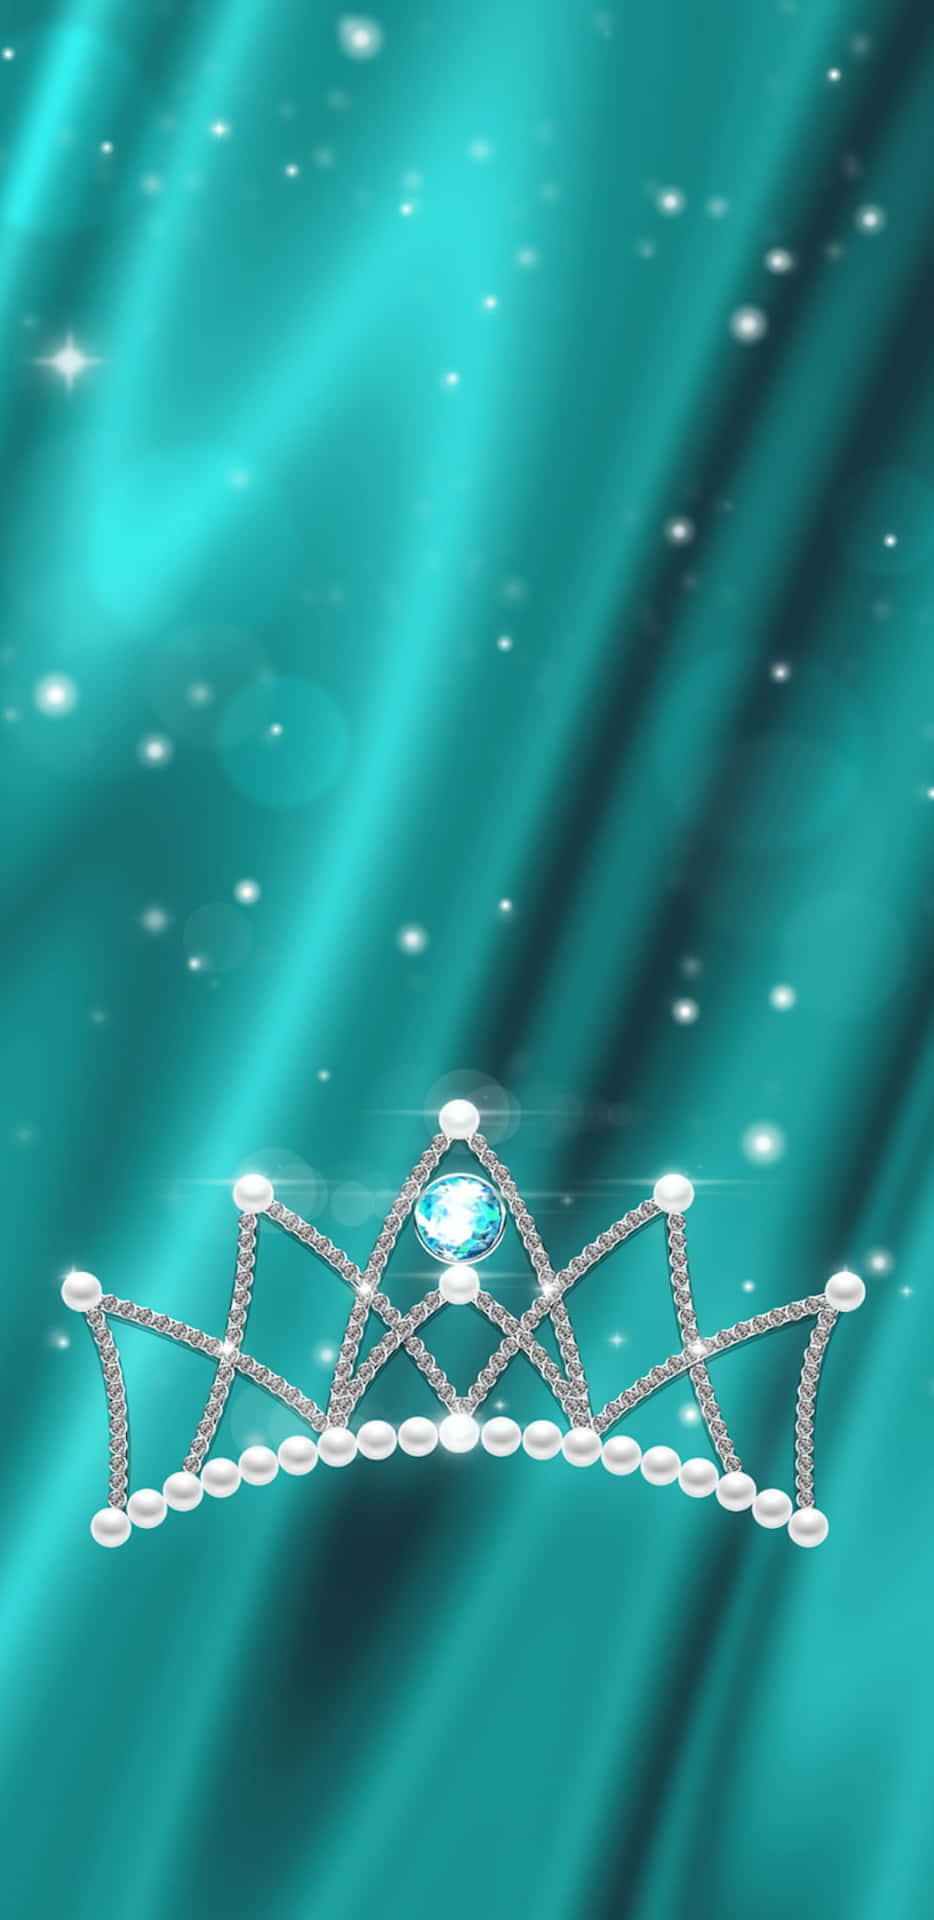 A beautiful Princess Crown, symbol of nobility. Wallpaper